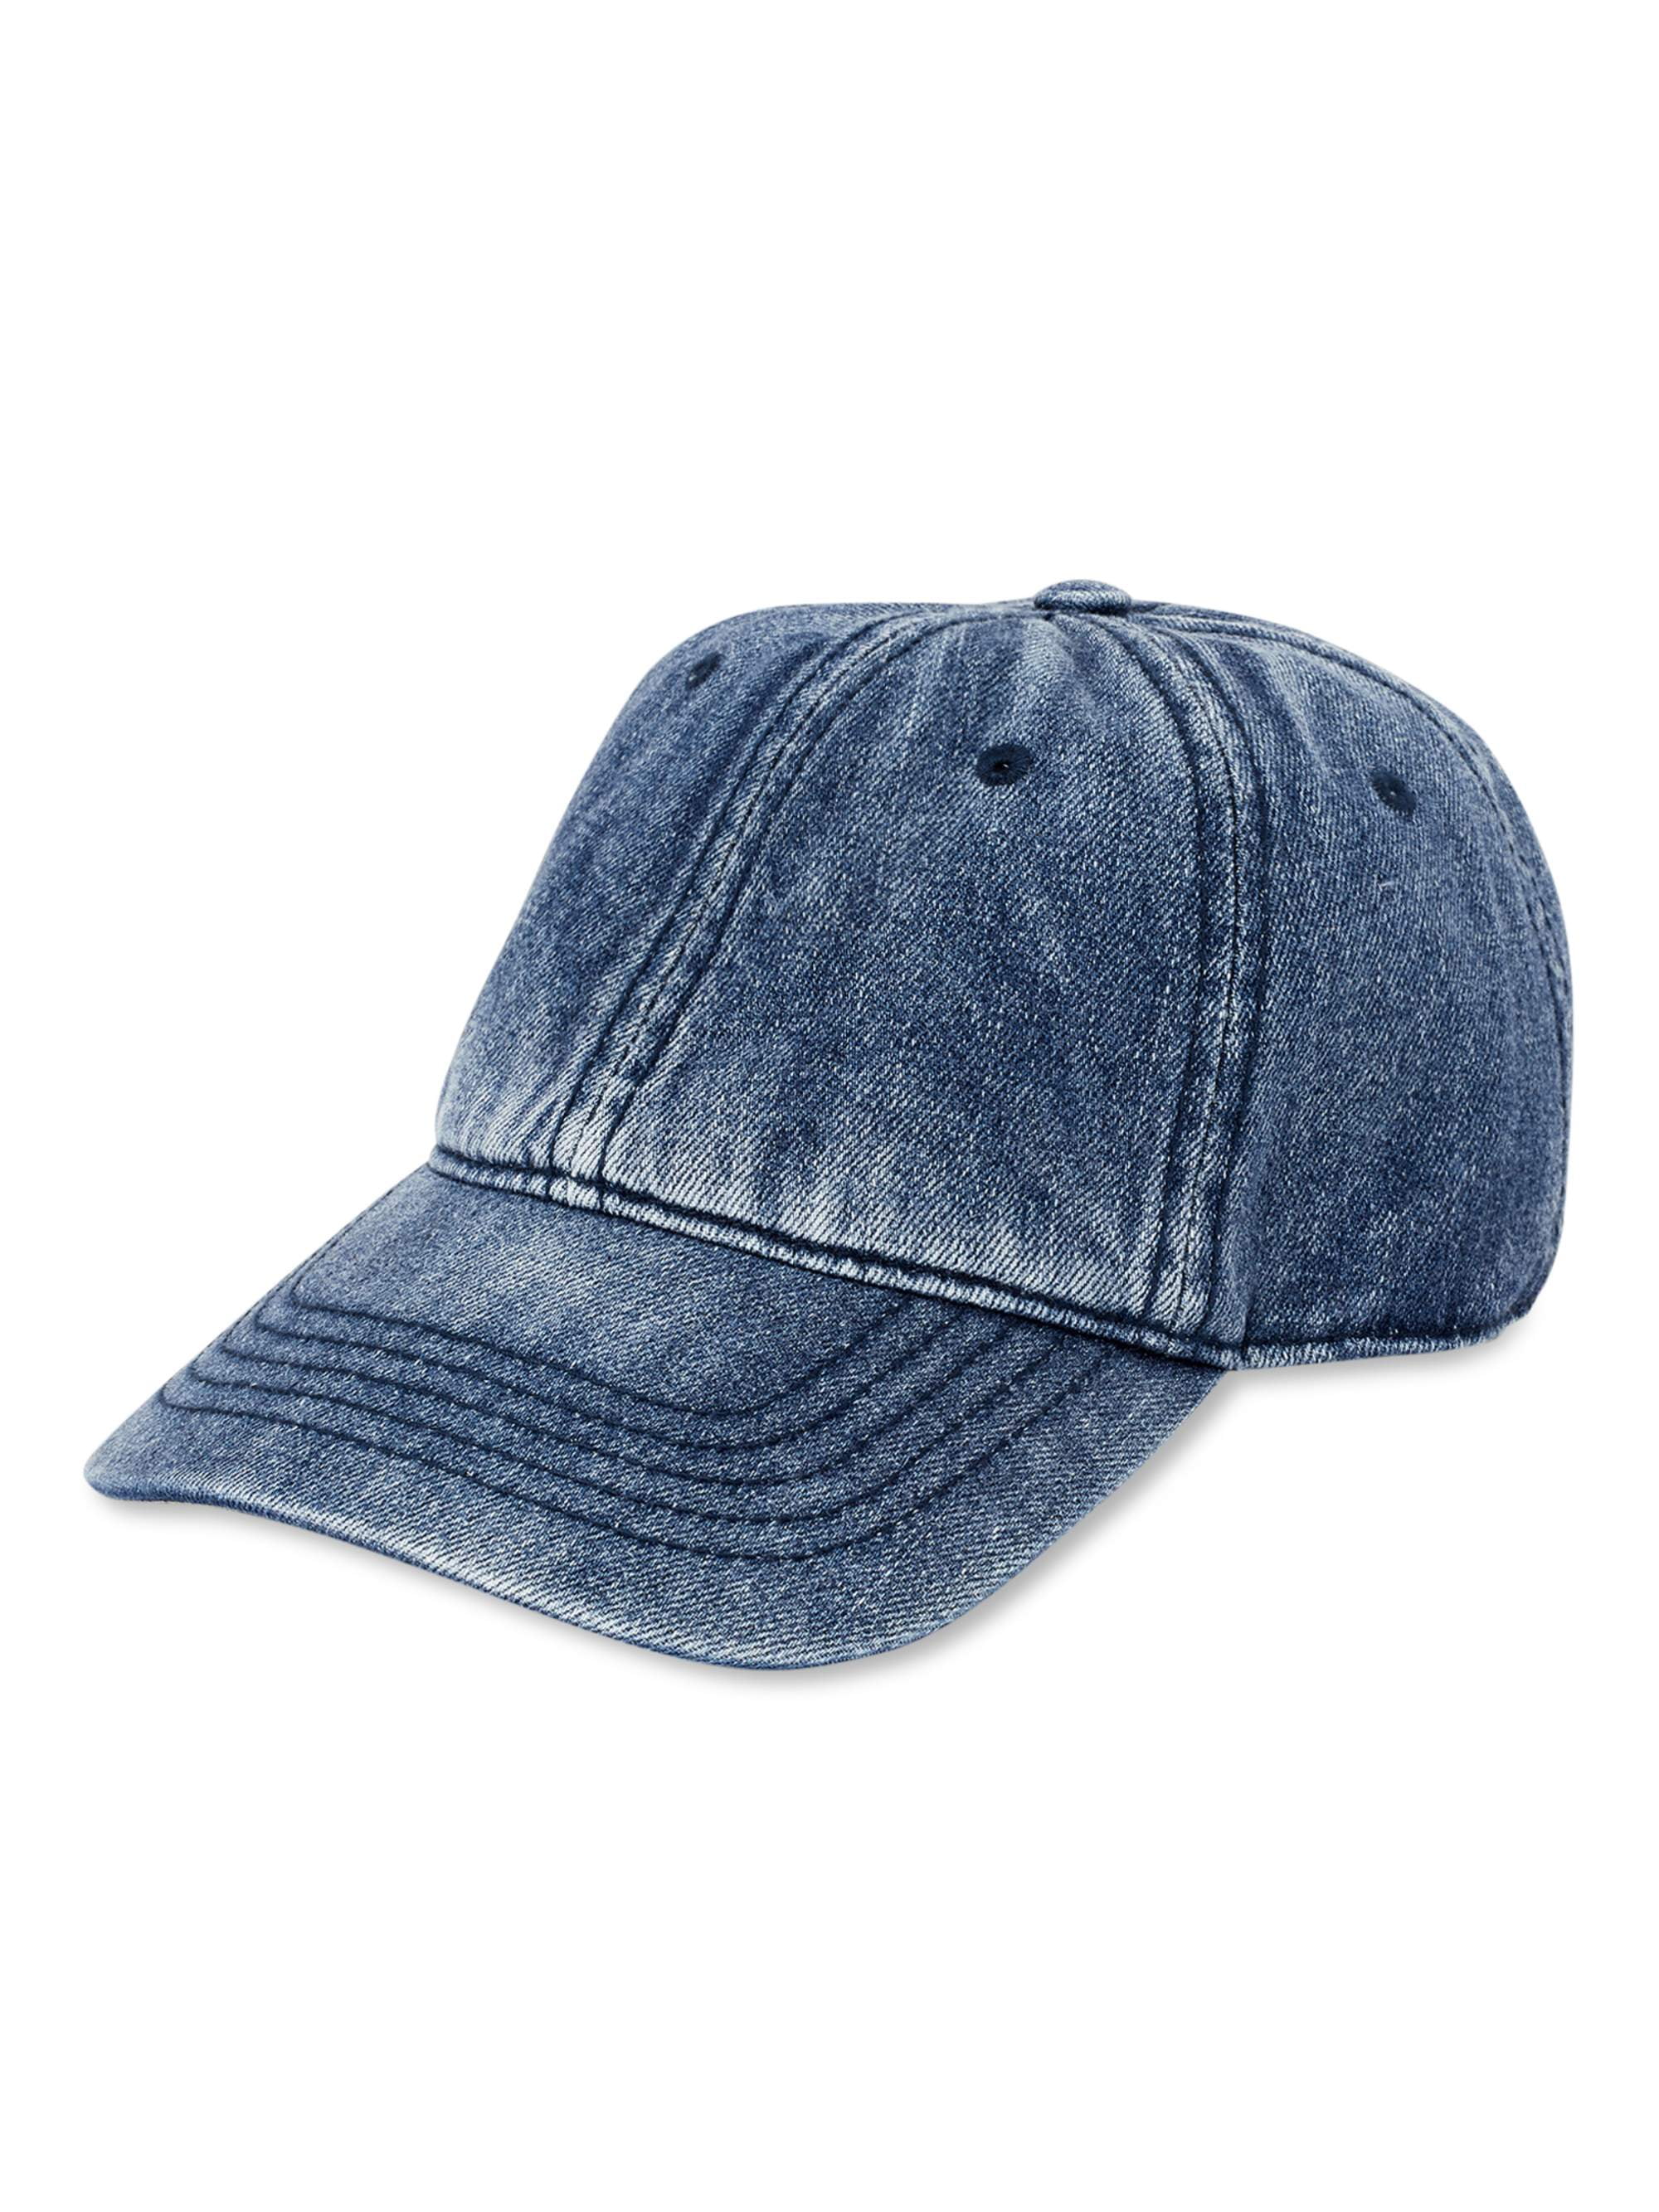 New Fashion Unisex Nostalgic Baseball  Wash vintage Jean Denim Cap Hat 